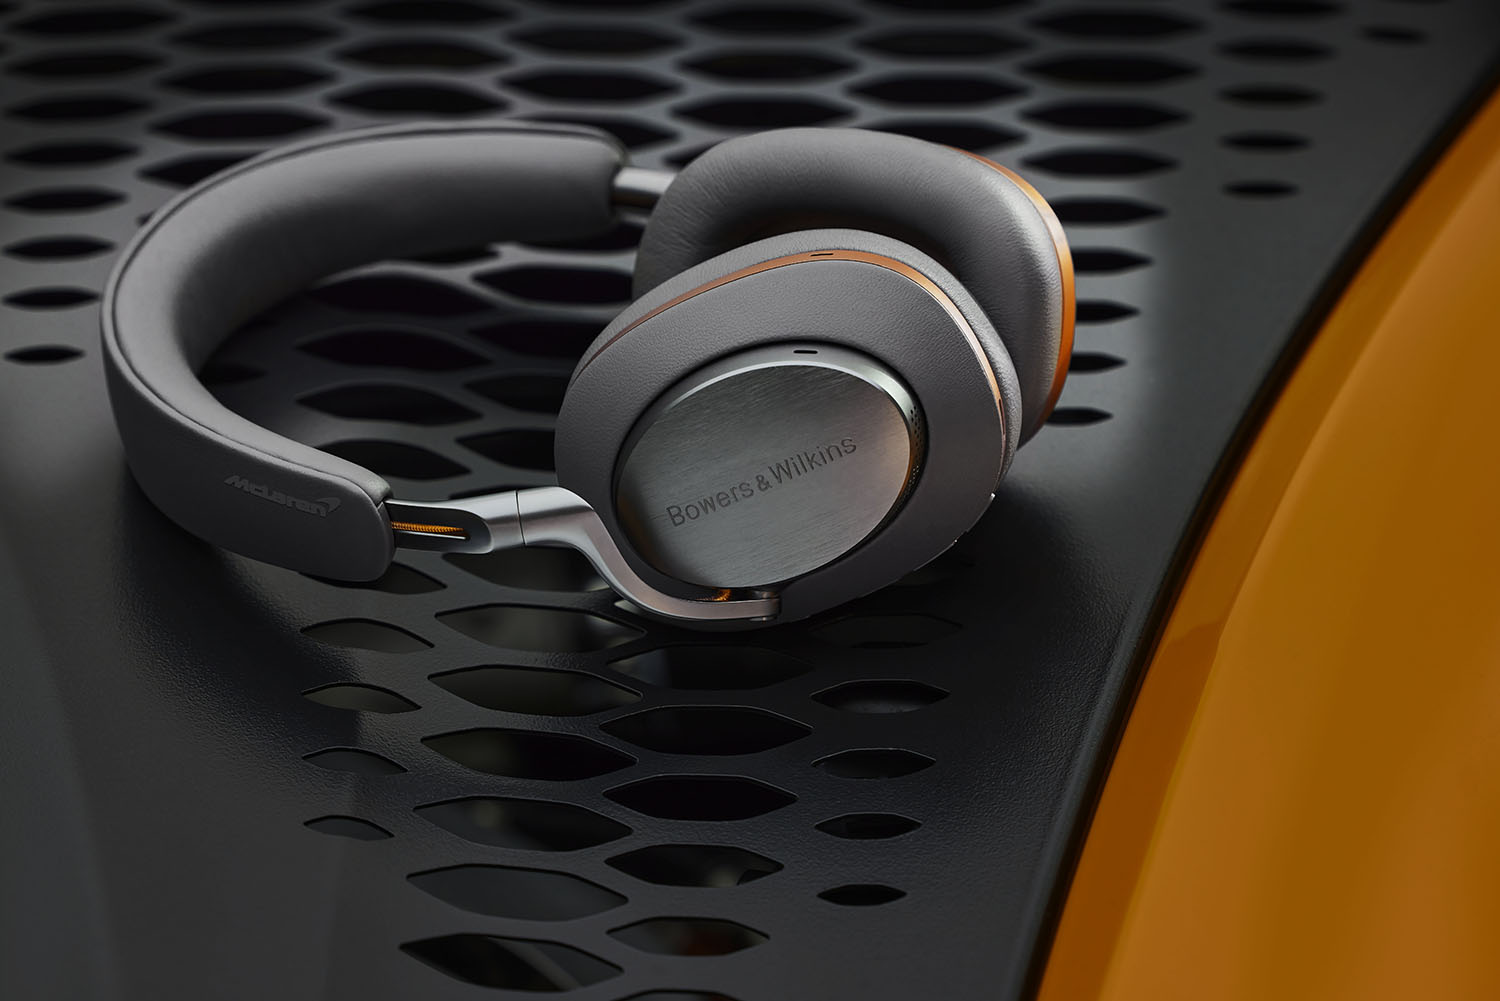 mclaren bowers & wilkins headphones wireless high-performance audio systems luxury brands